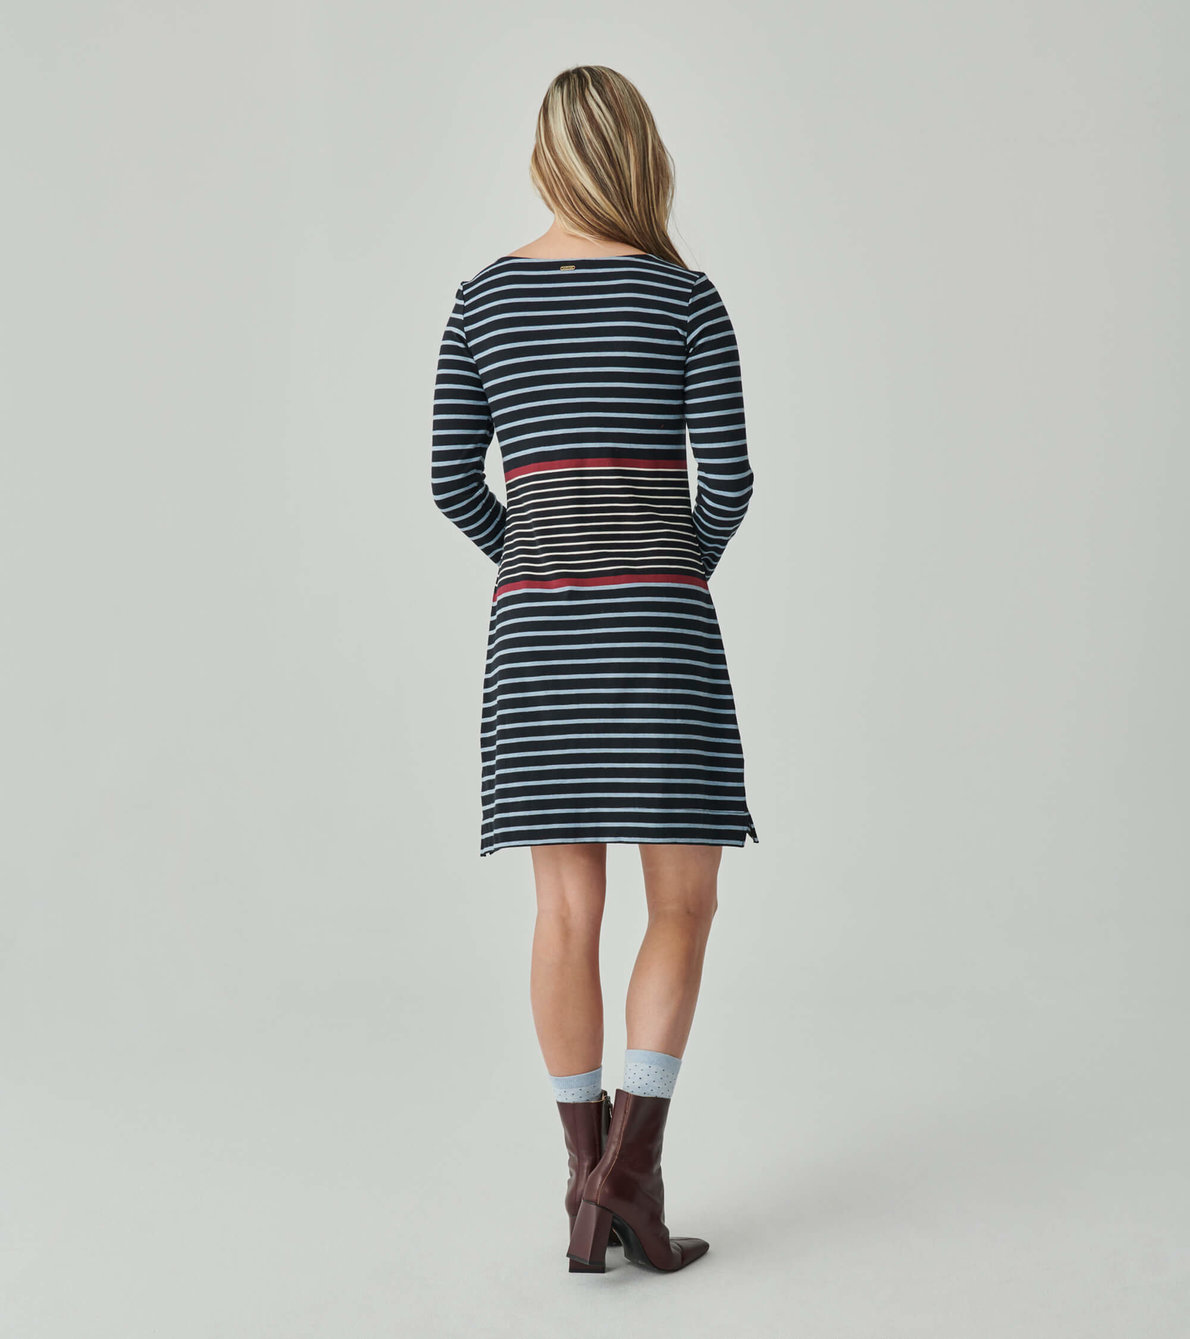 View larger image of Zoe Dress - Black Stripes